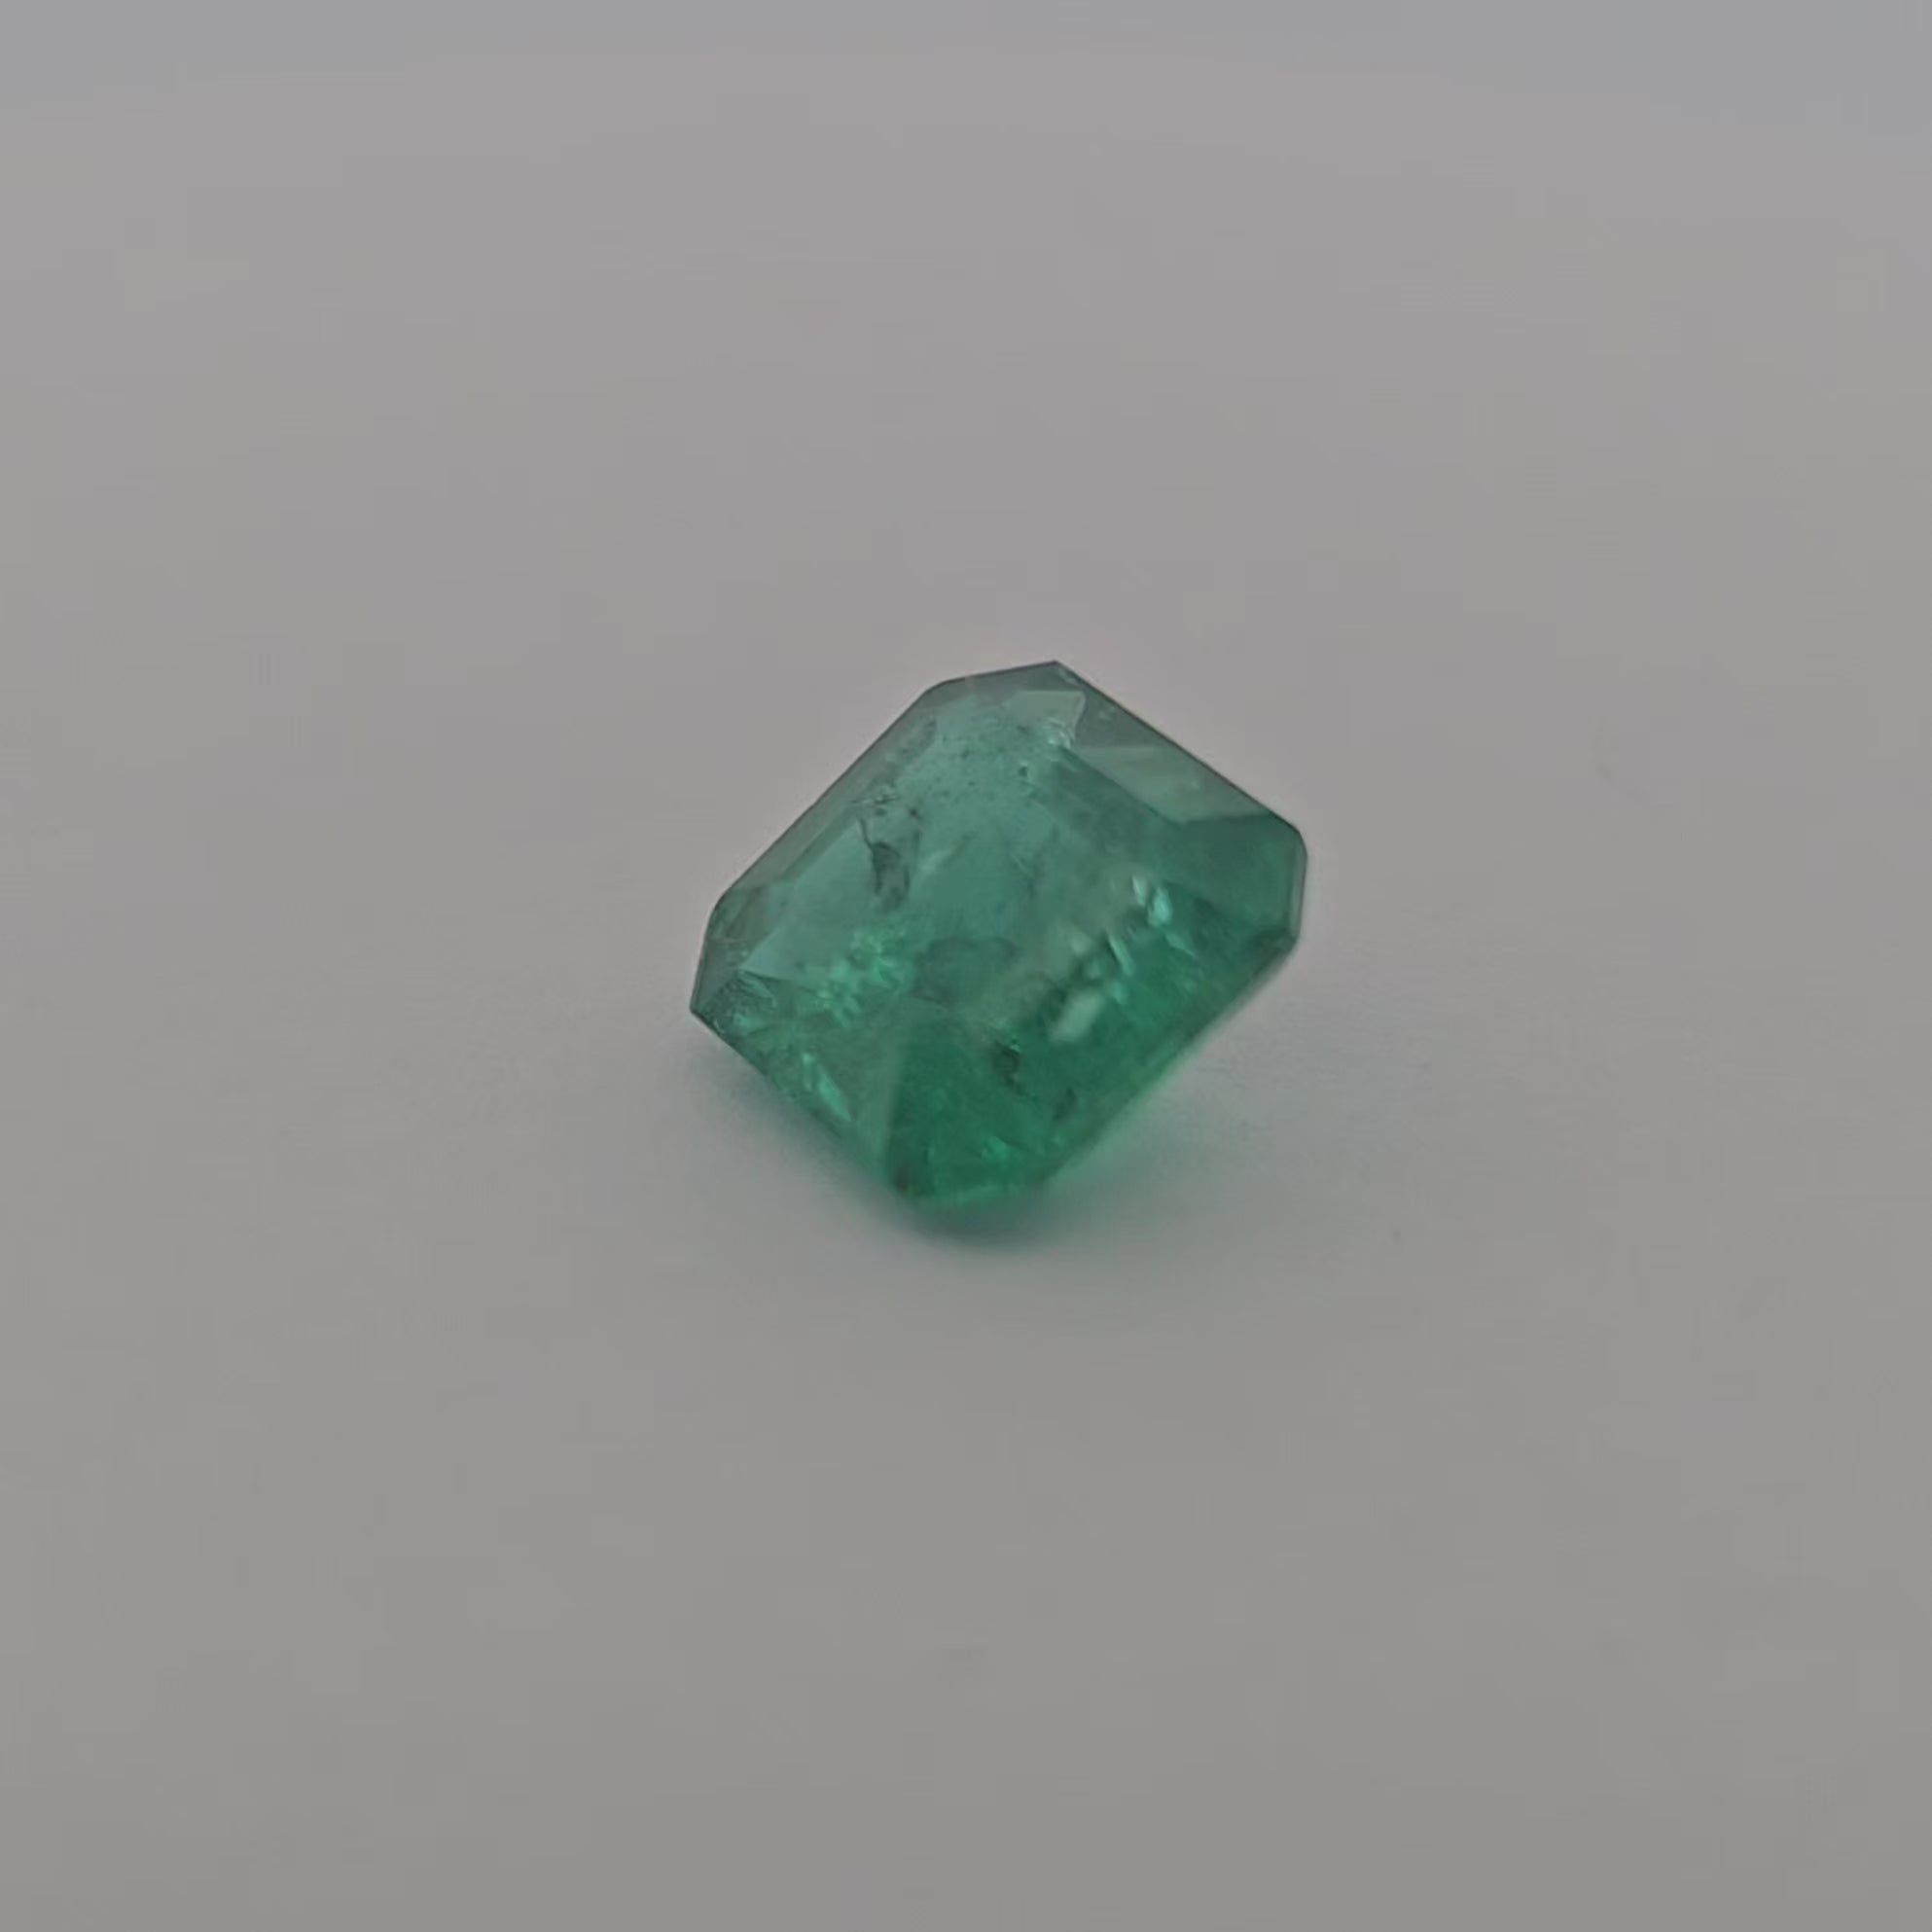 loose Natural Zambian Emerald Stone 2.98 Carats Emerald Cut 9 x 8.8  mm